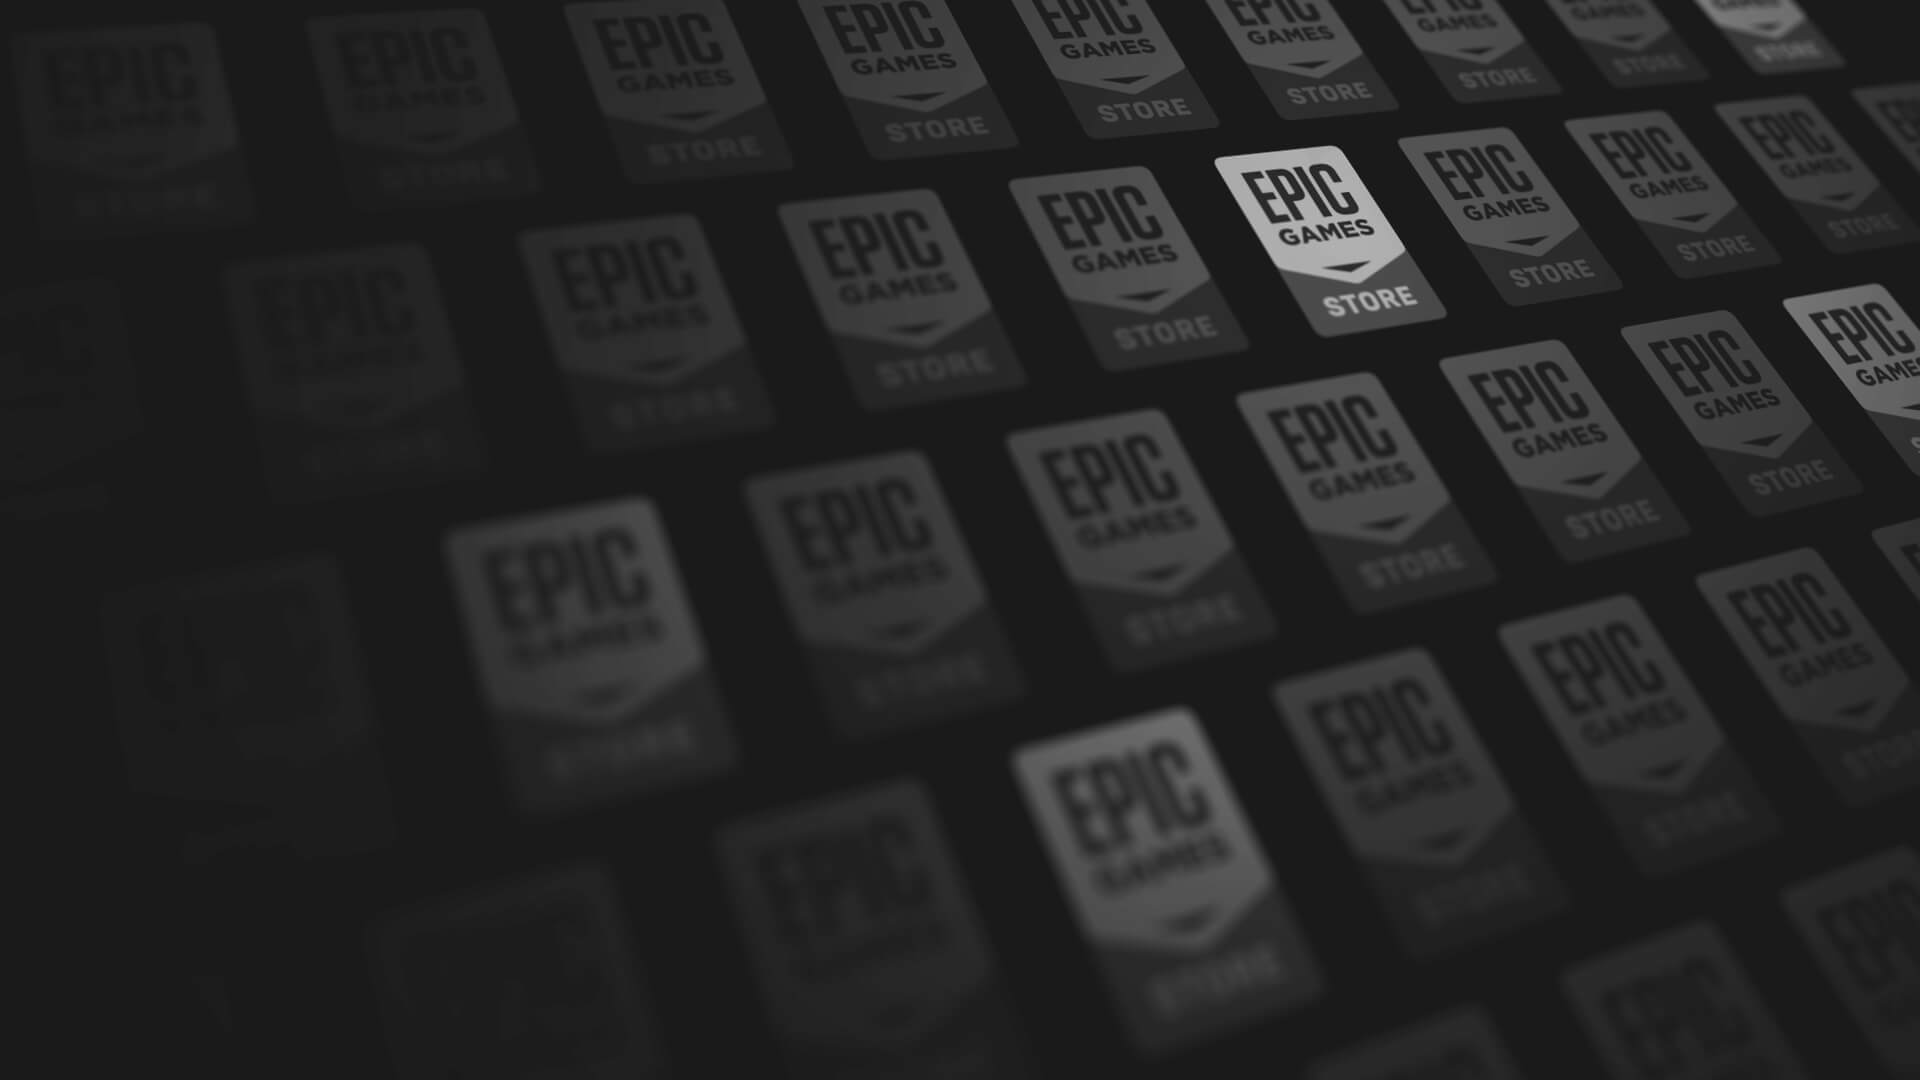 Epic-Games-Mien-Phi-Phong-Vu-1.jpg